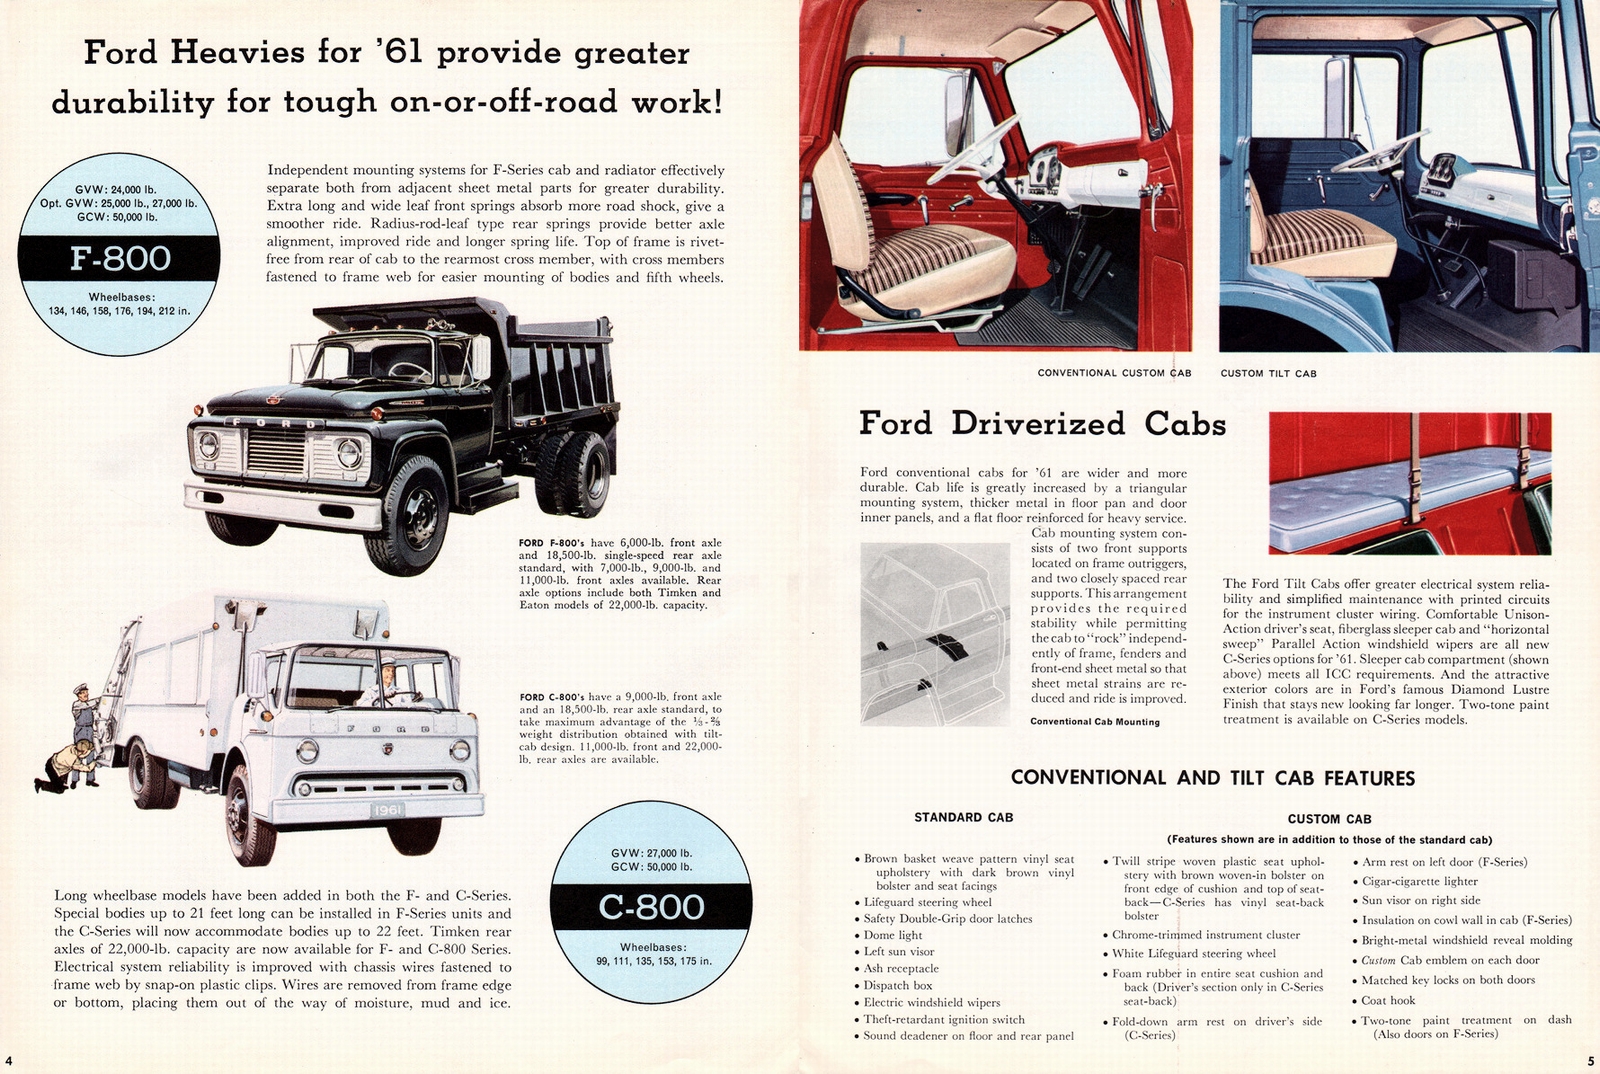 n_1961 Ford Heavy Duty Trucks (Rev)-04-05.jpg